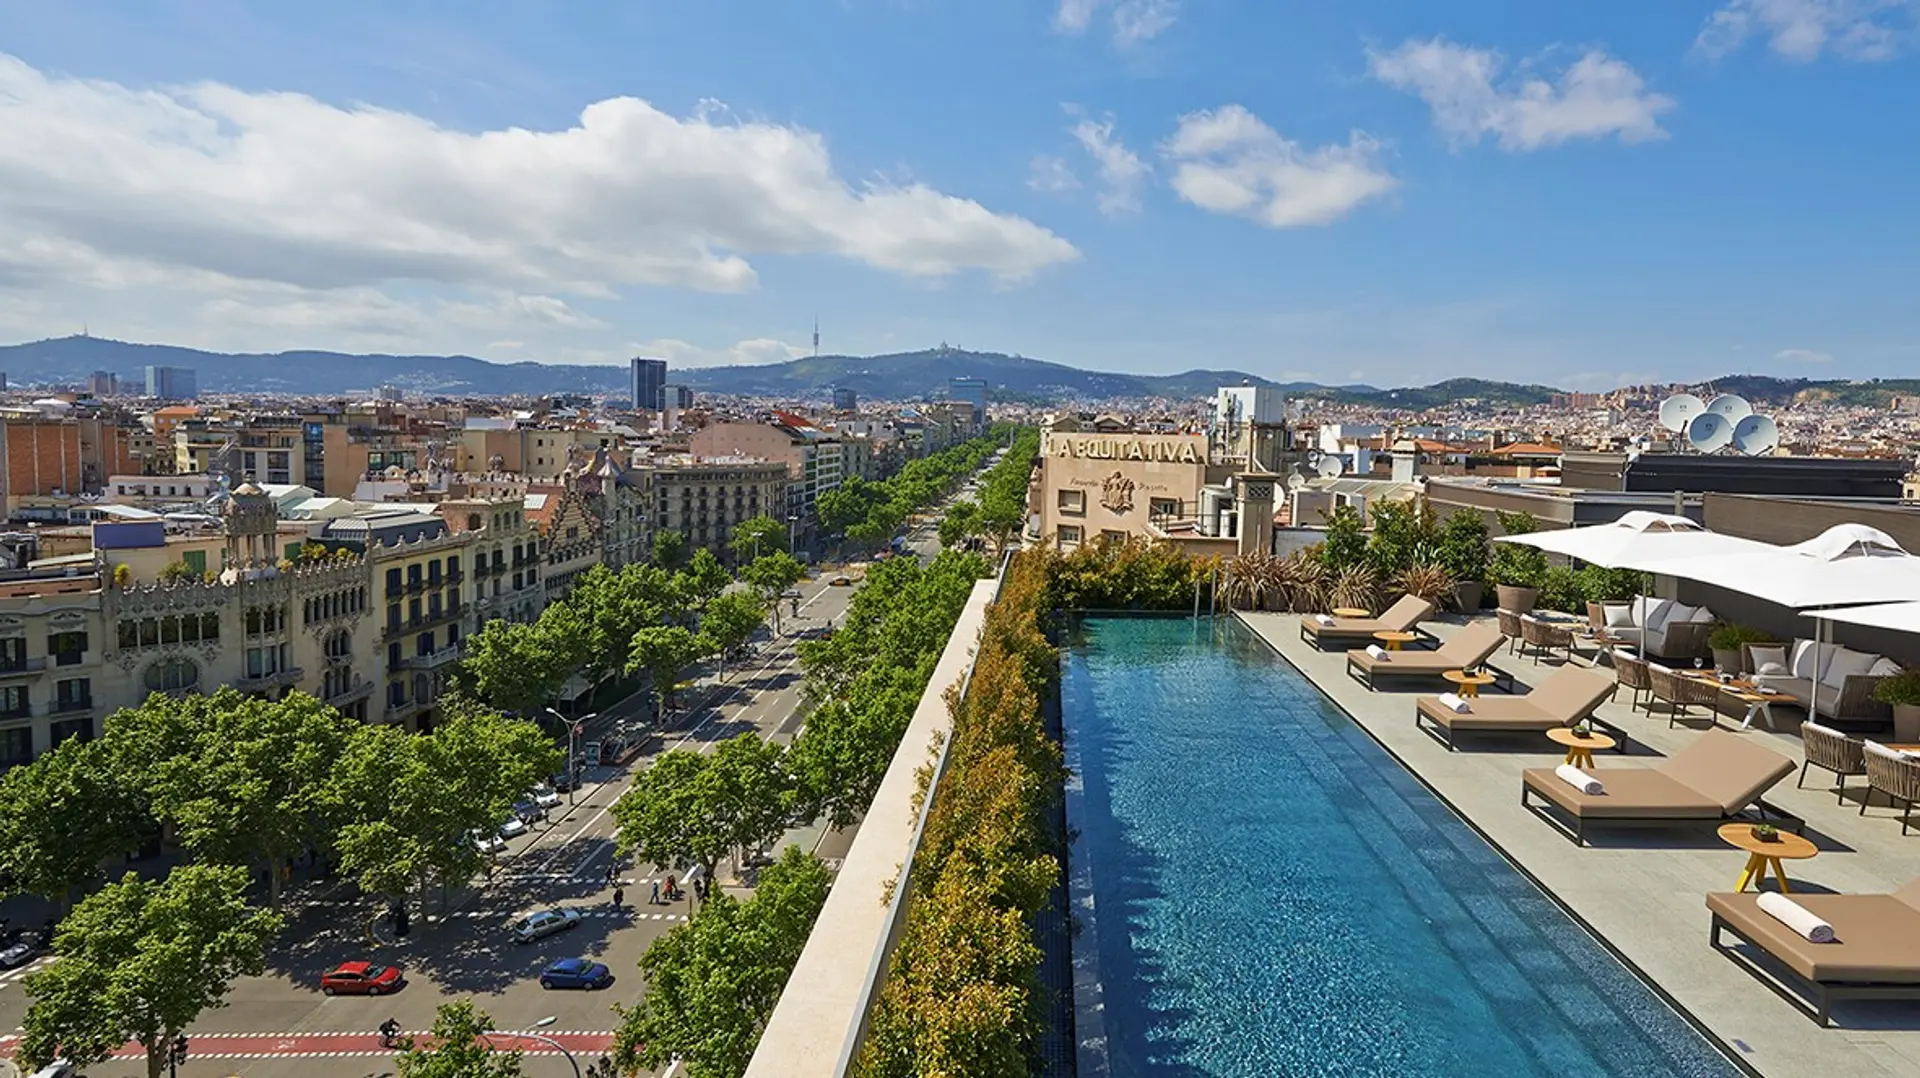 Hotel review Service & Facilities' - Mandarin Oriental Barcelona - 0